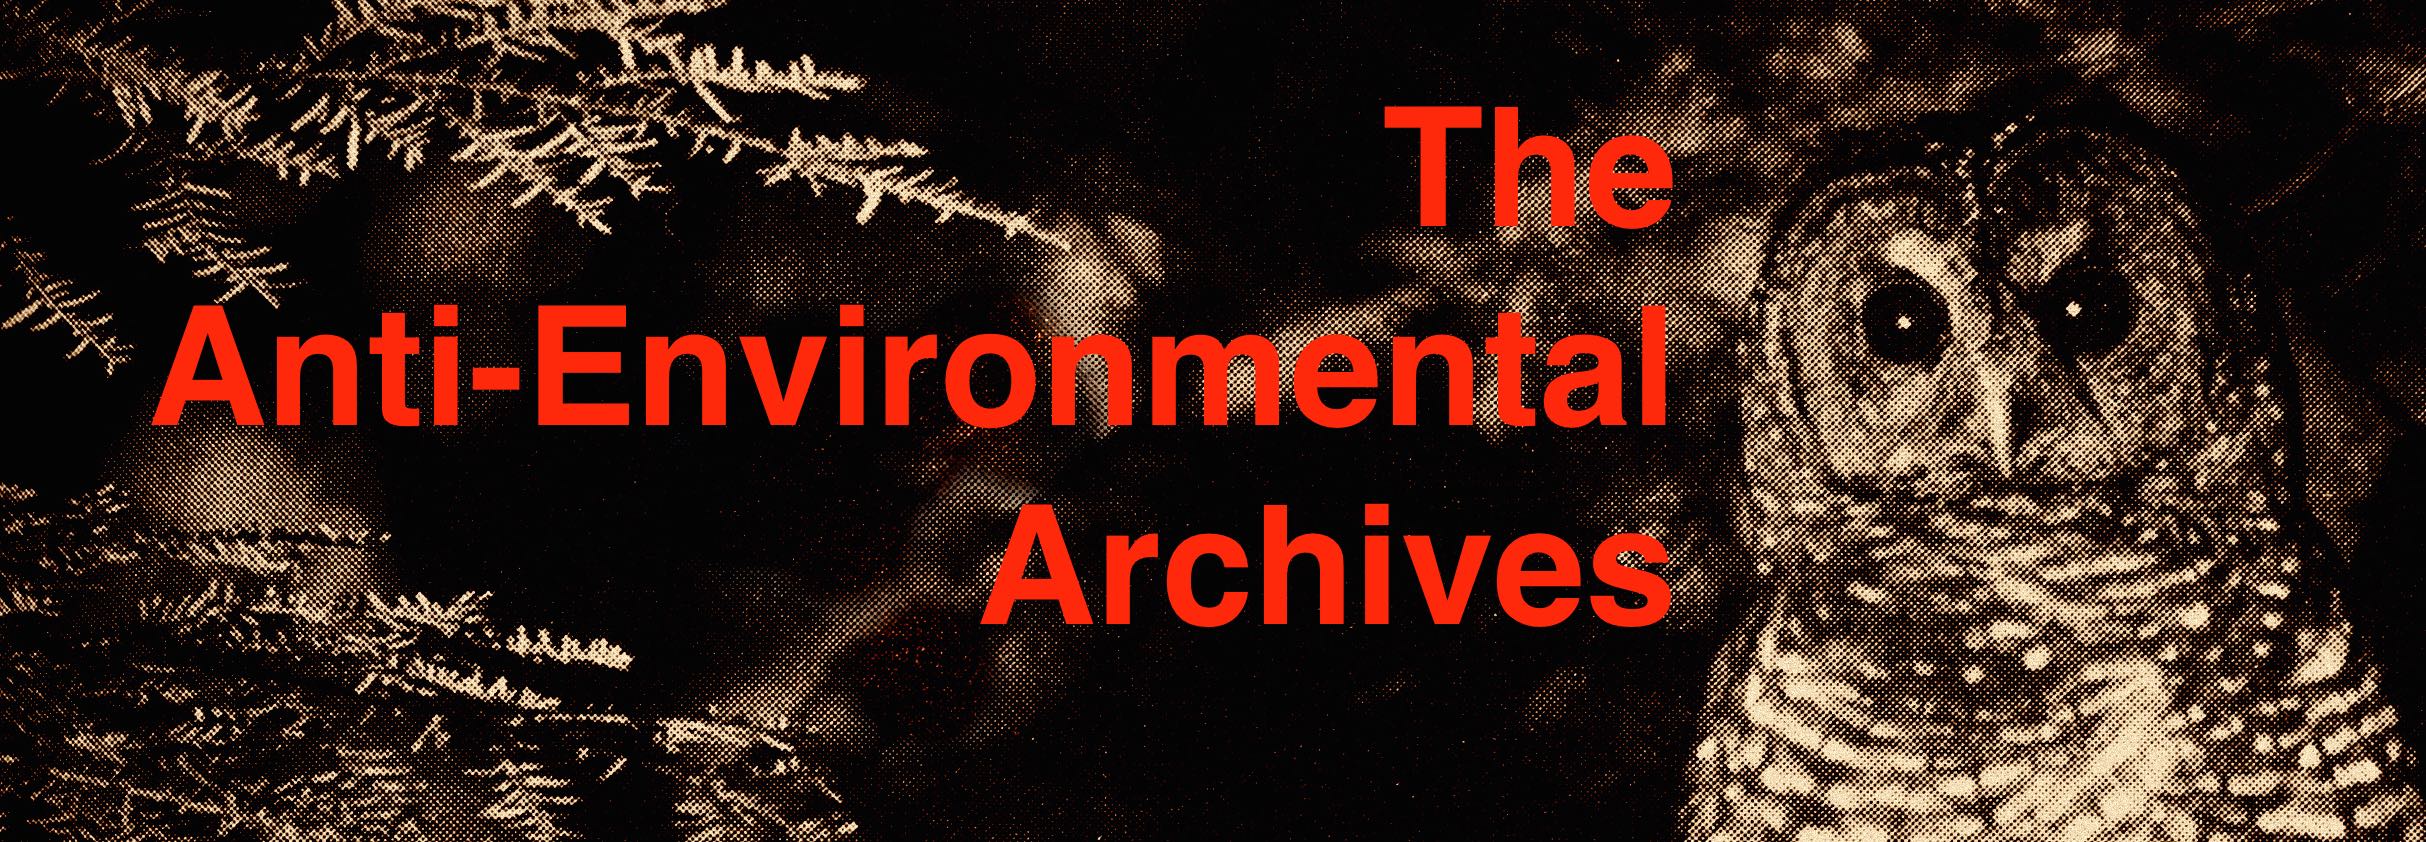 Anti-Environmental Archives